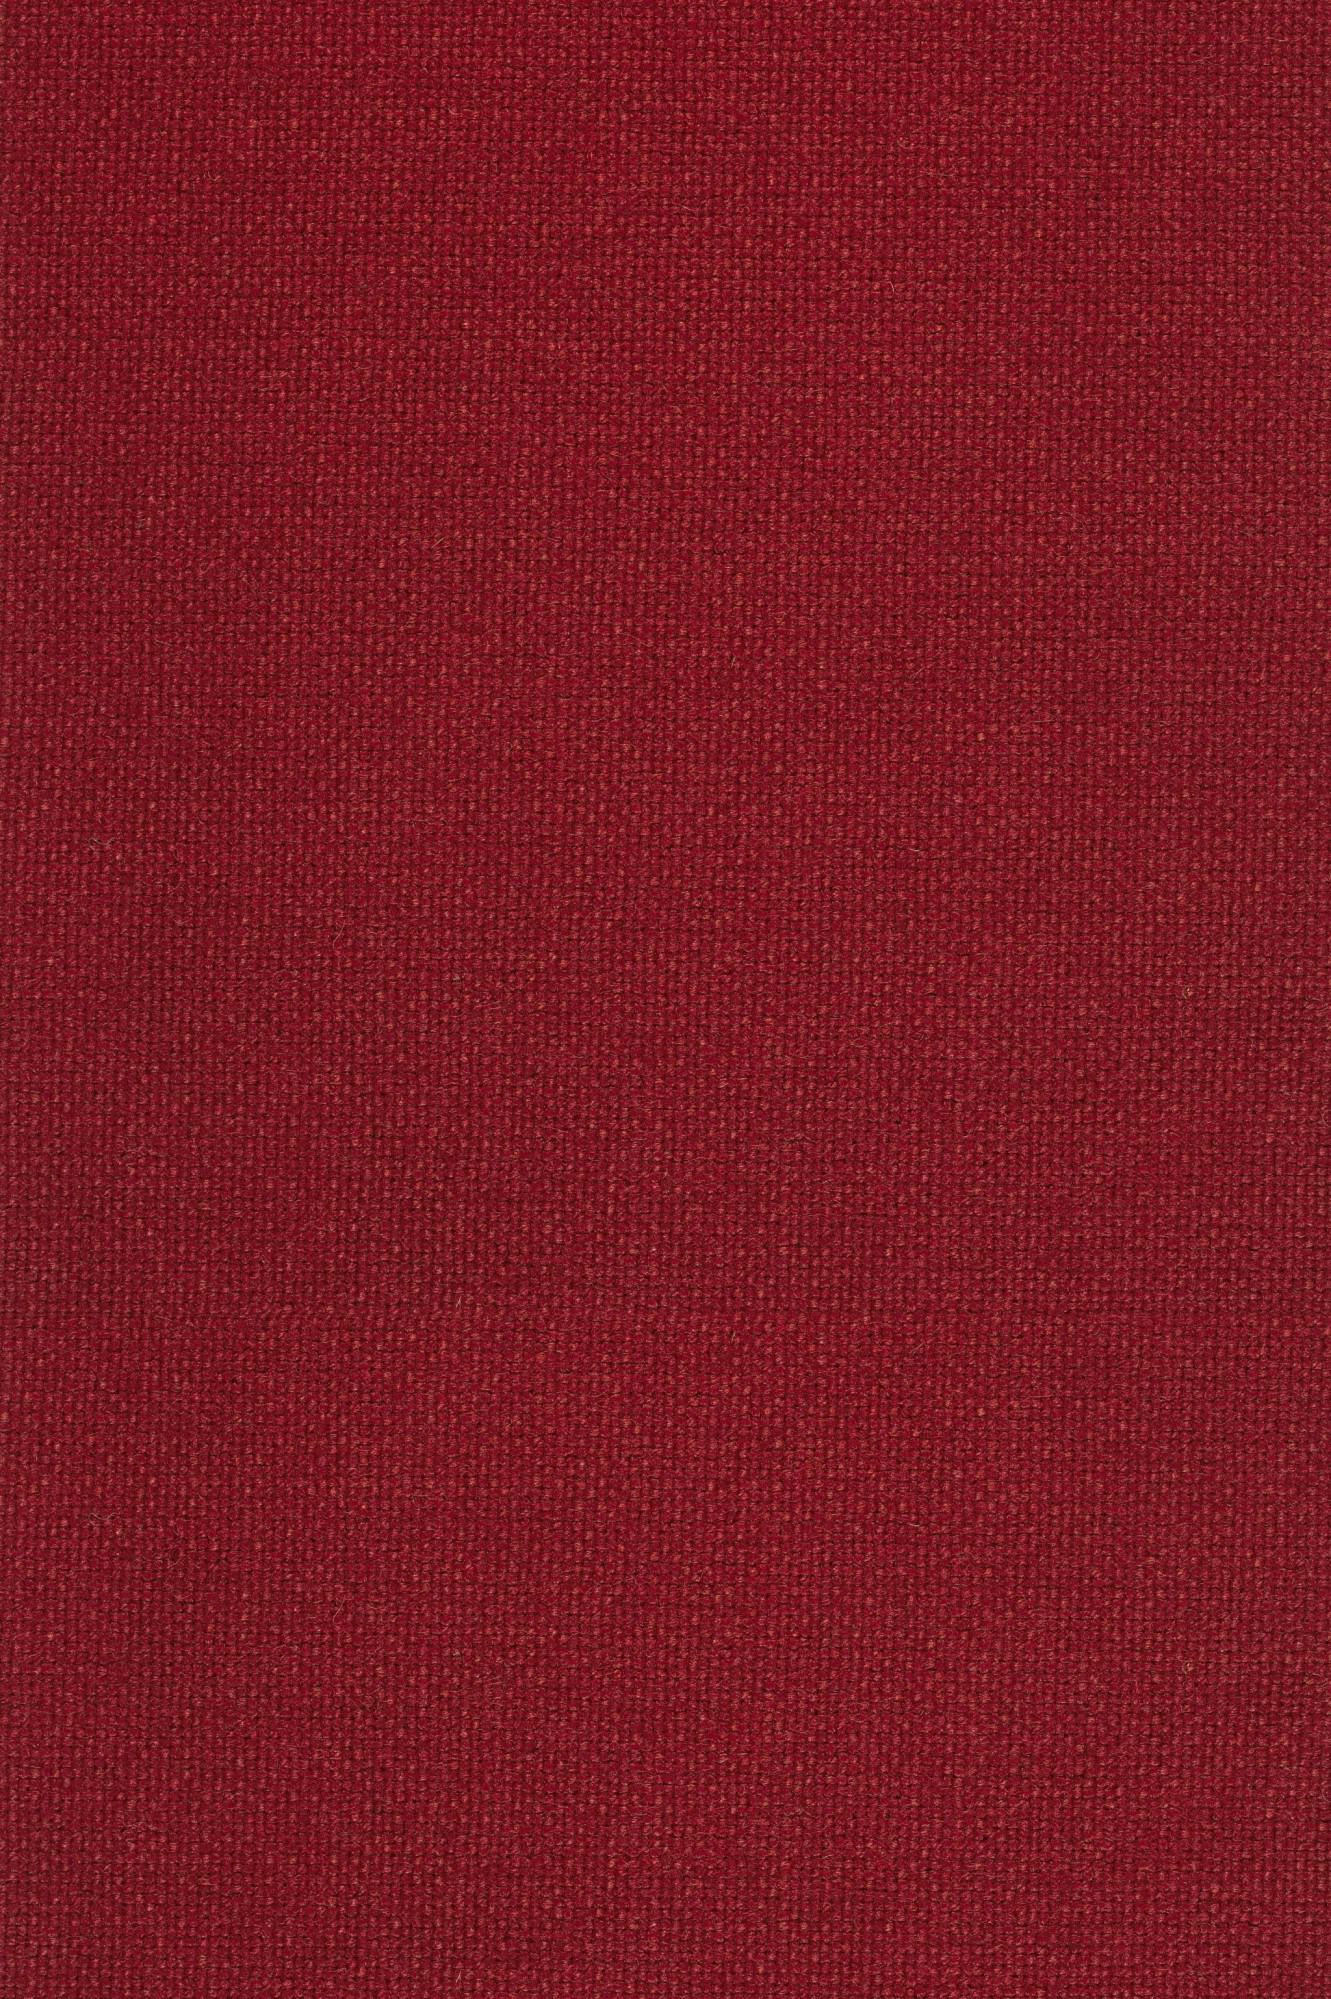 Fabric sample Hallingdal 65 657 red